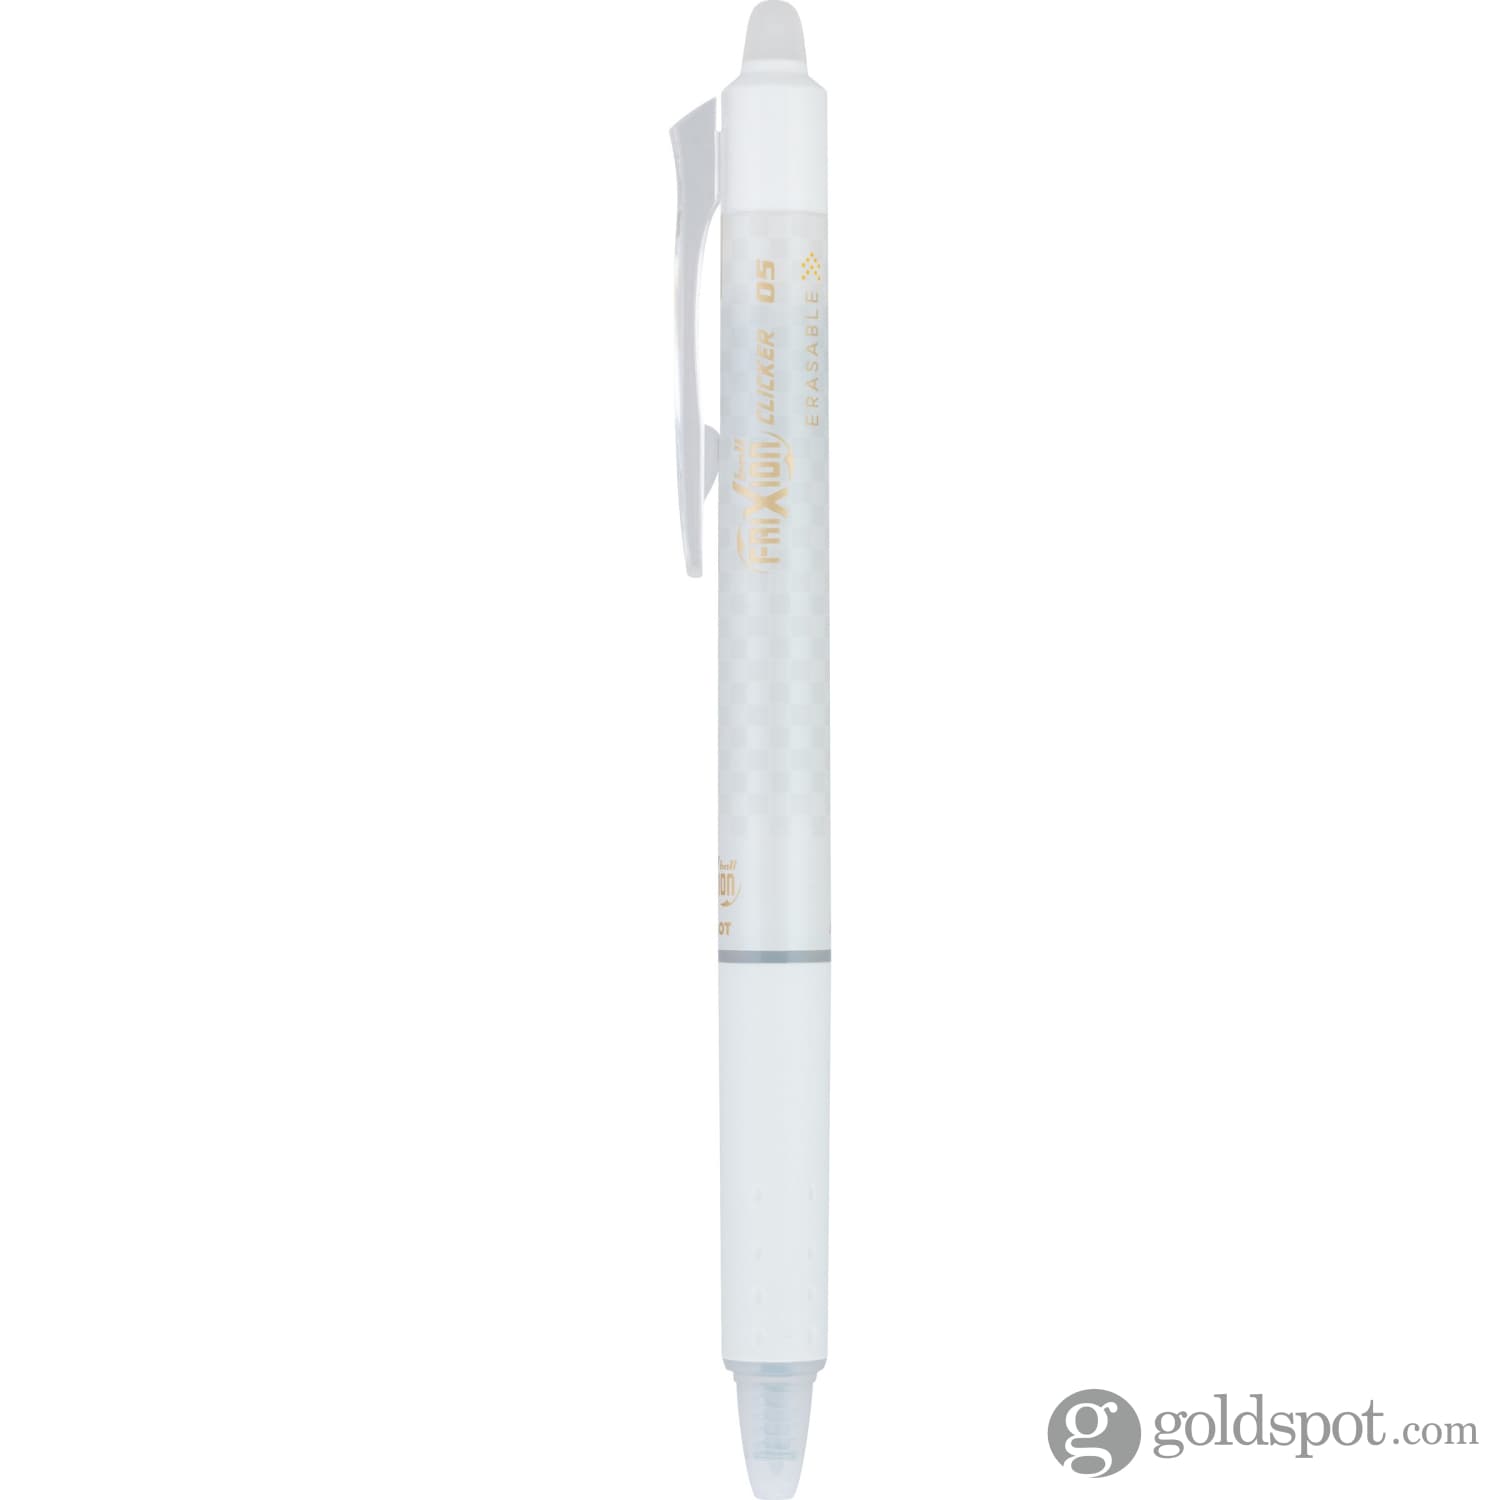 Pilot FriXion Clicker Retractable Erasable Gel Ink Pen Set, Pack